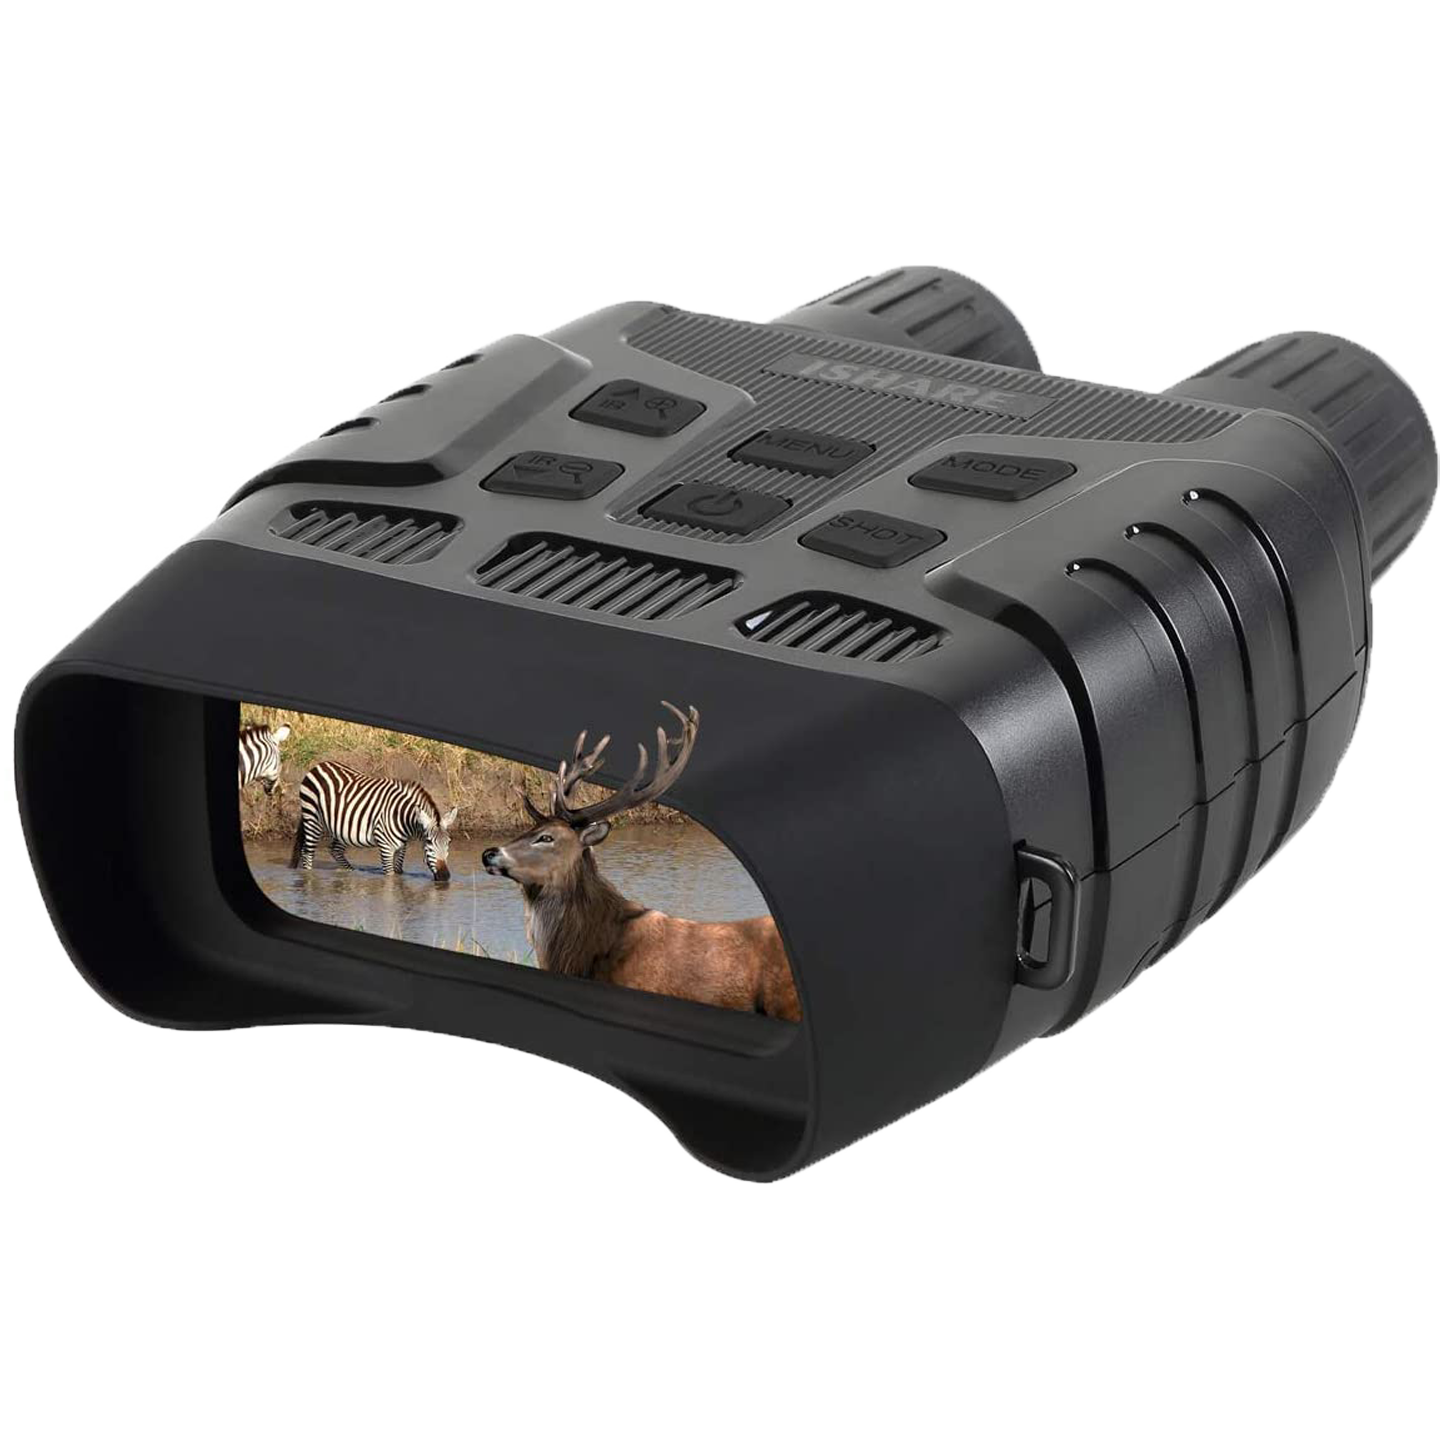 Night Vision Binoculars & Goggles, Digital Infrared Night Vision Binoculars for Darkness, Hunting Surveillance Spotting